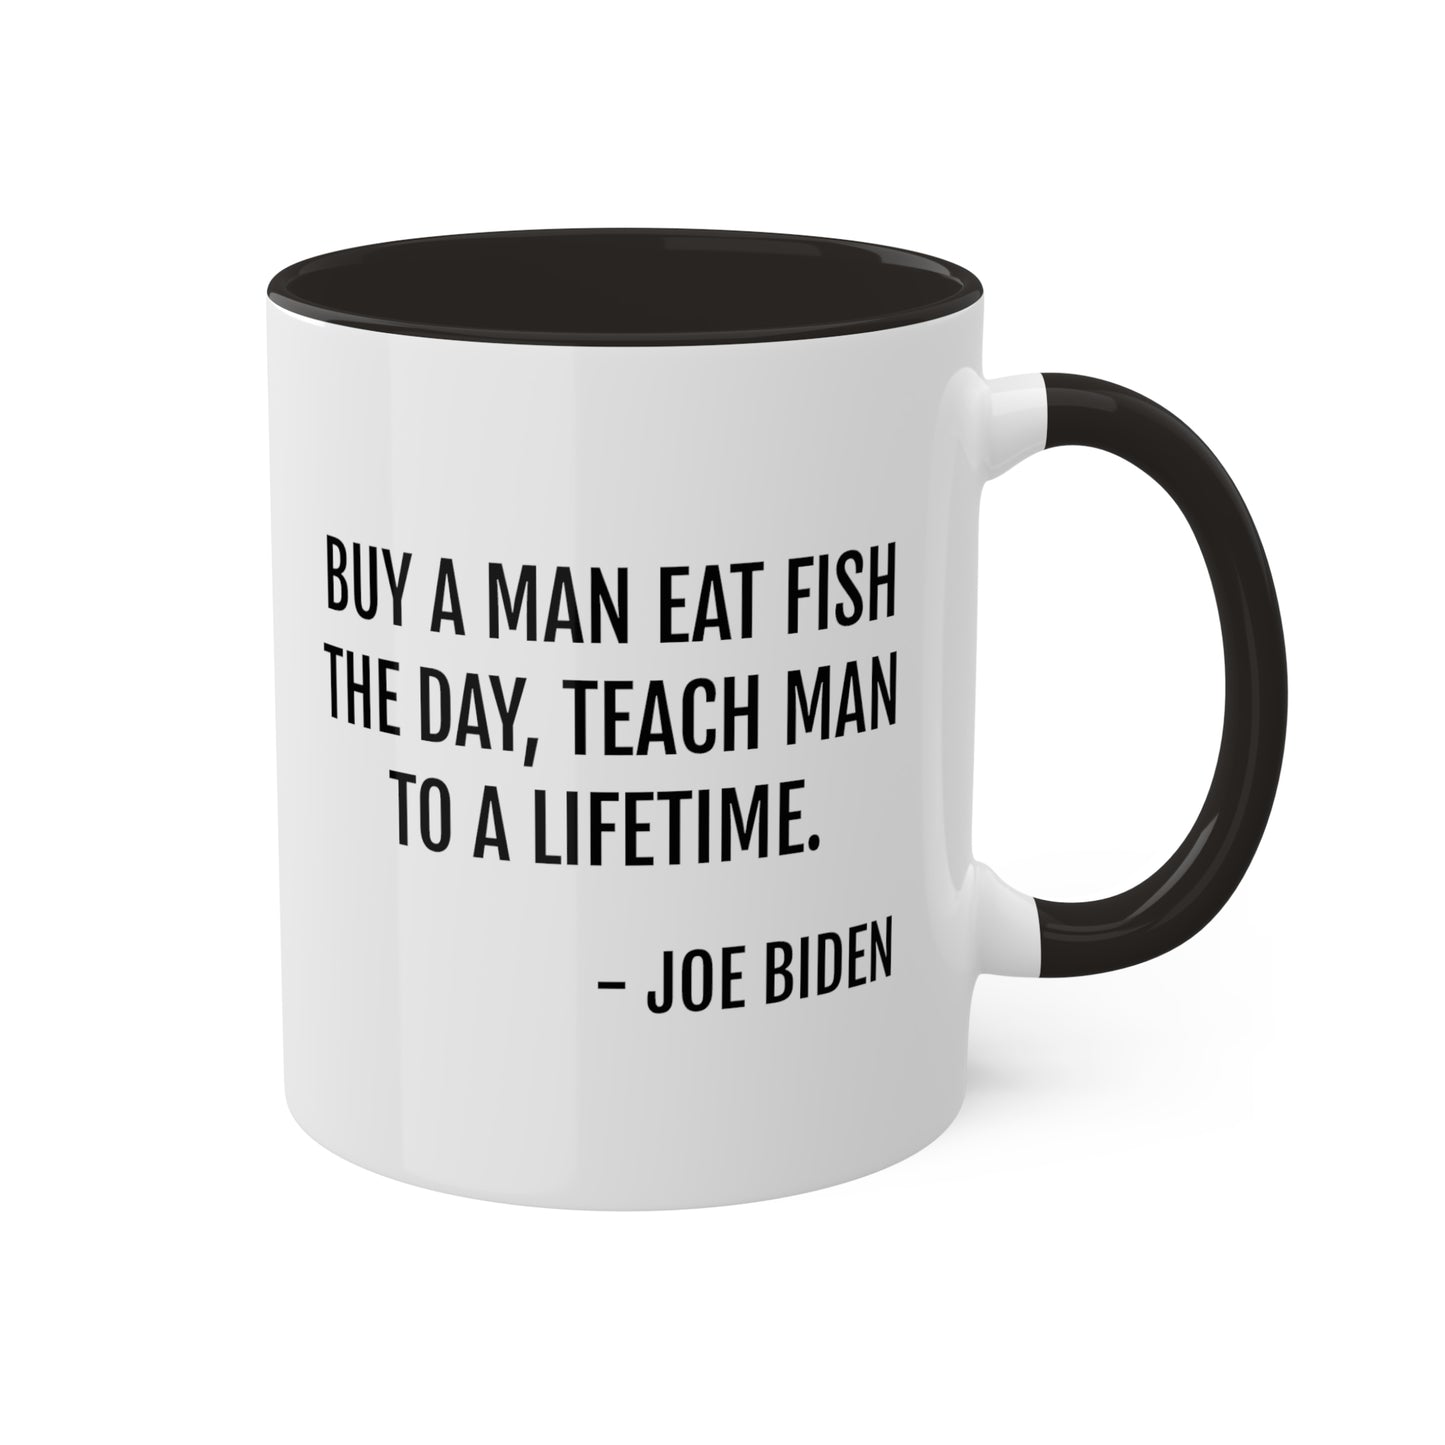 Joe Biden Buy a Man Eat Fish Coffee Mug, Funny Joe Biden Quote Mug, Humorous Political Gag Gift, Office Humor, Political Satire - News For Reasonable People